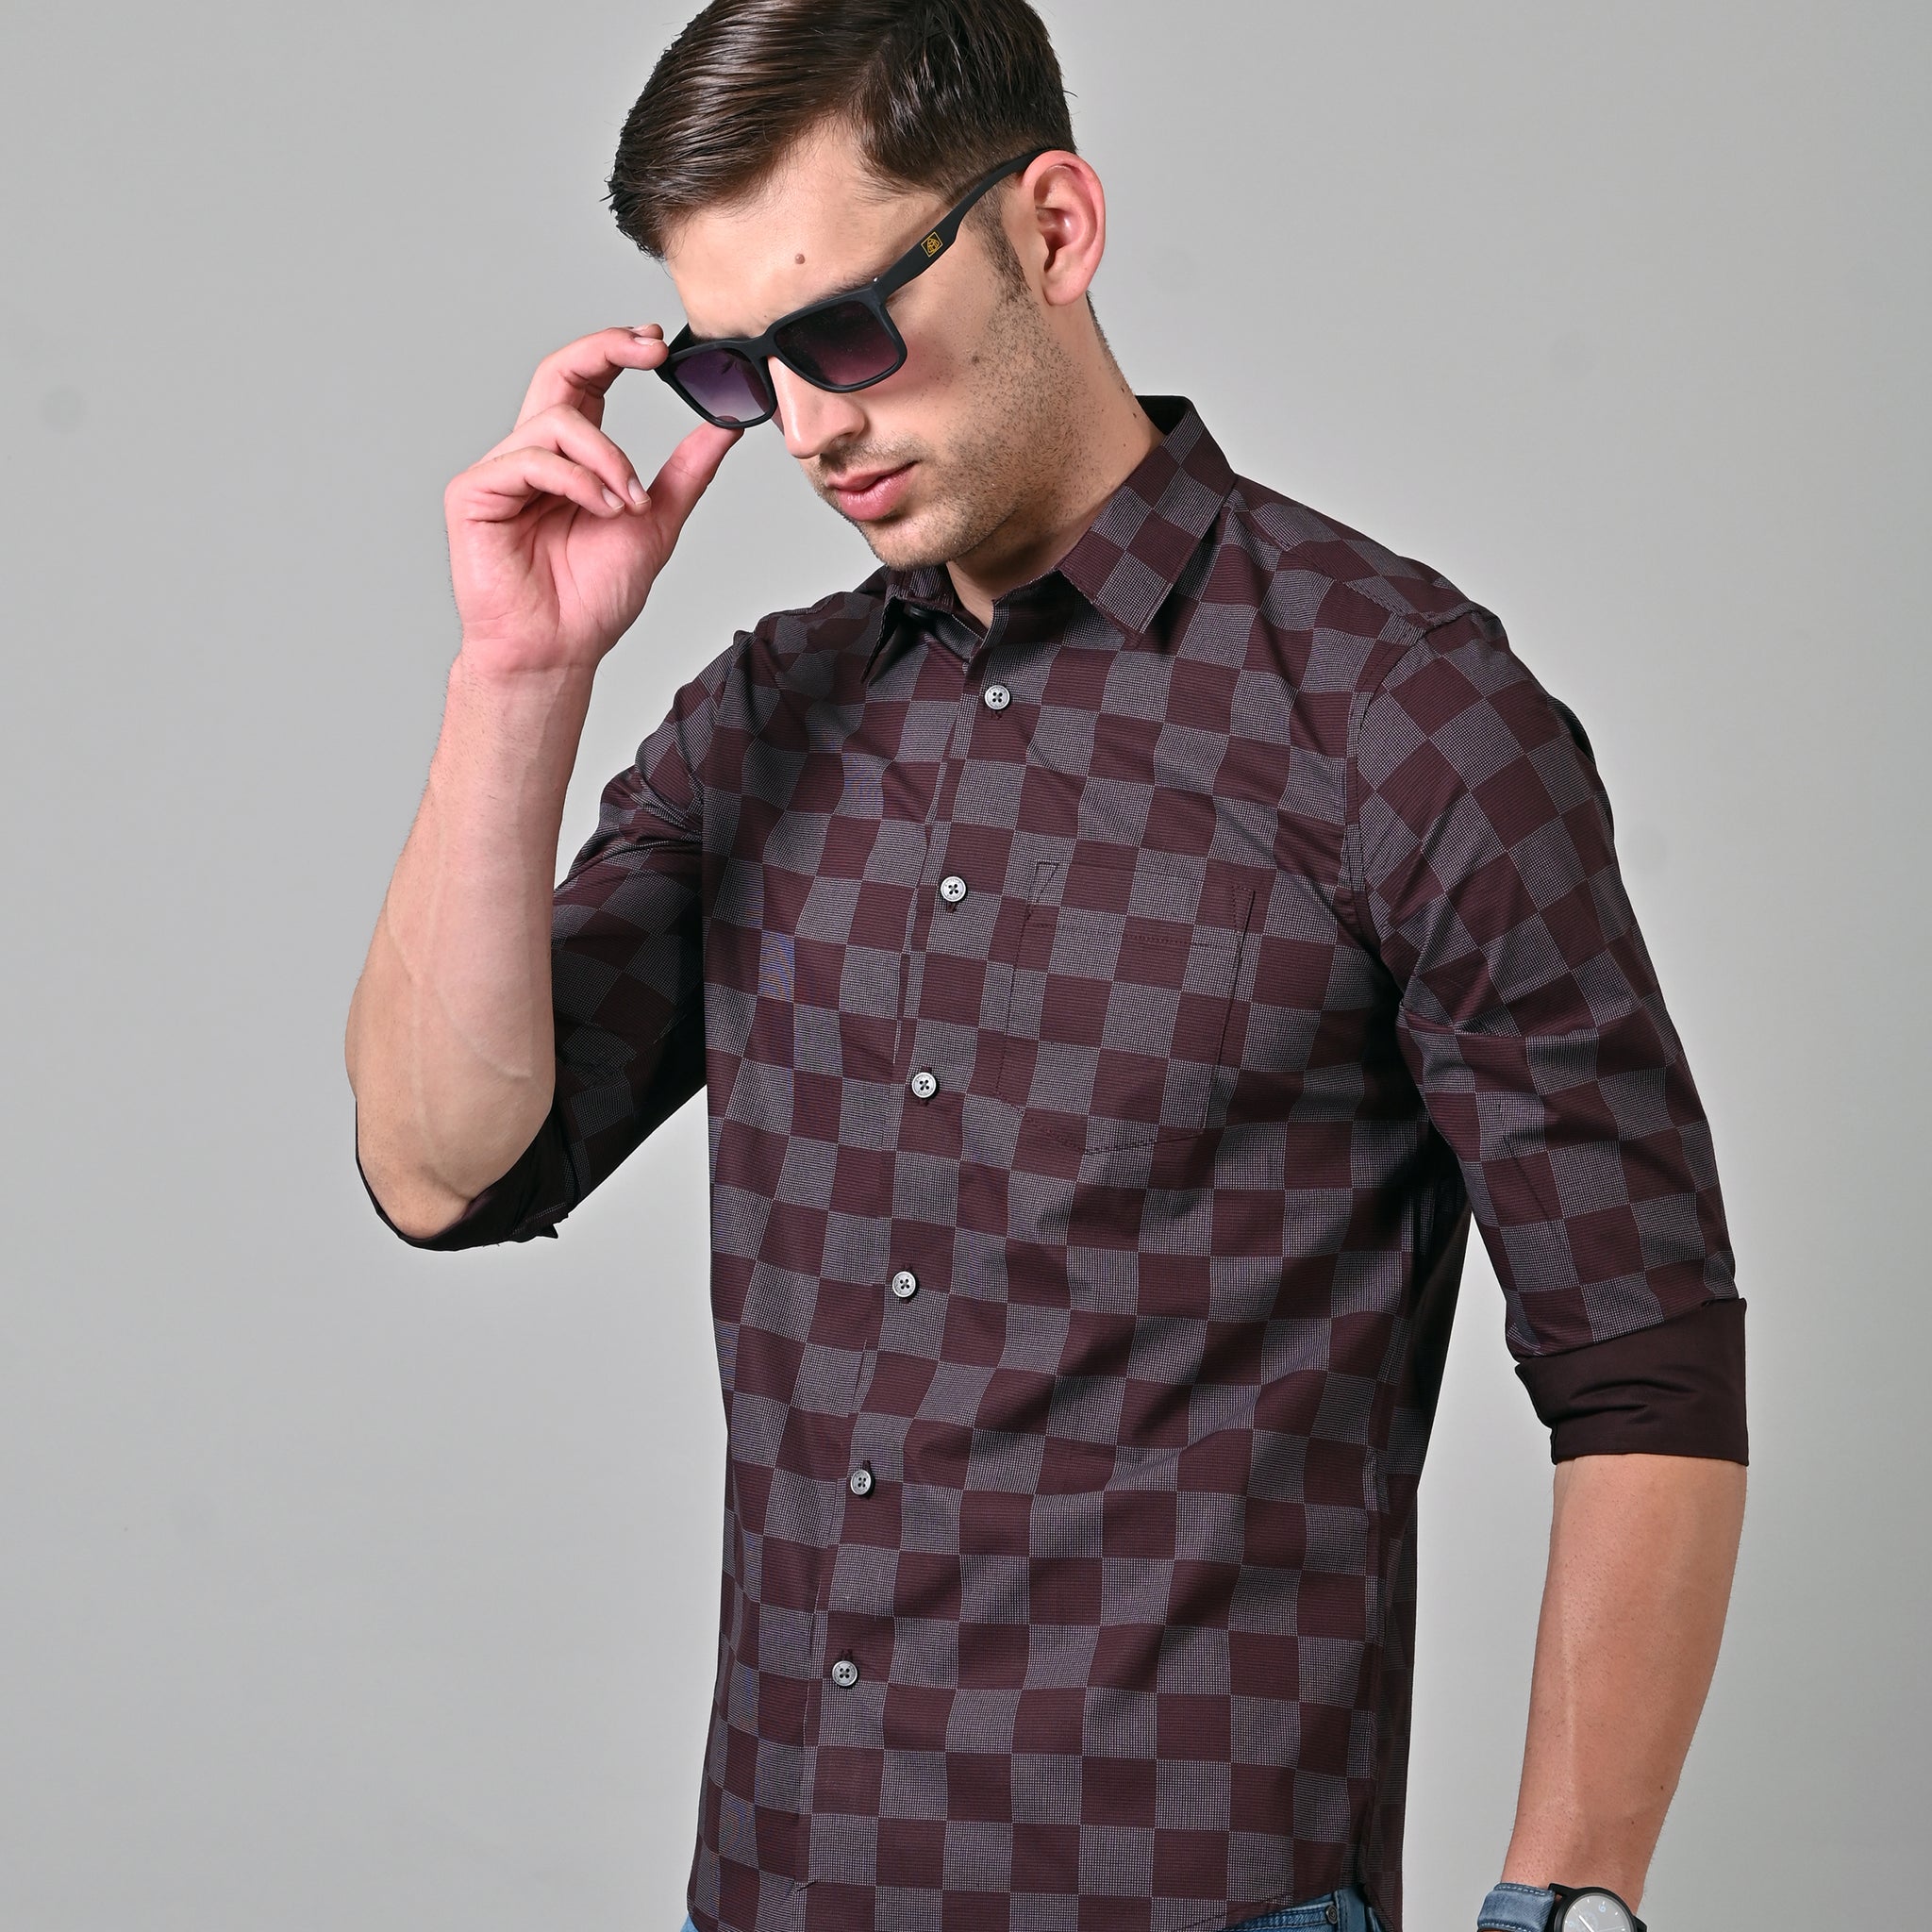 Poplin Checkered Shirt